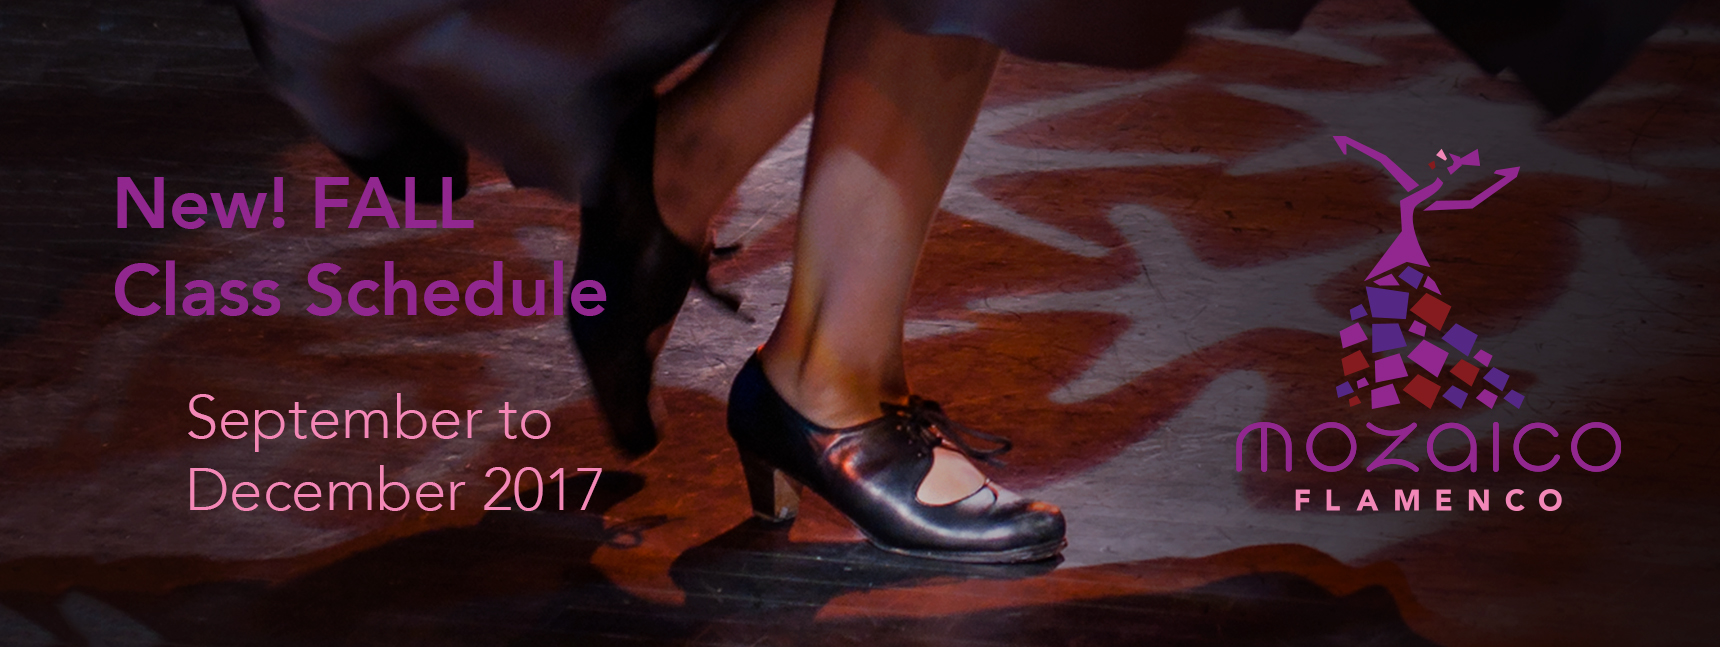 Mozaico-Flamenco-Fall-Class-Schedule-2017